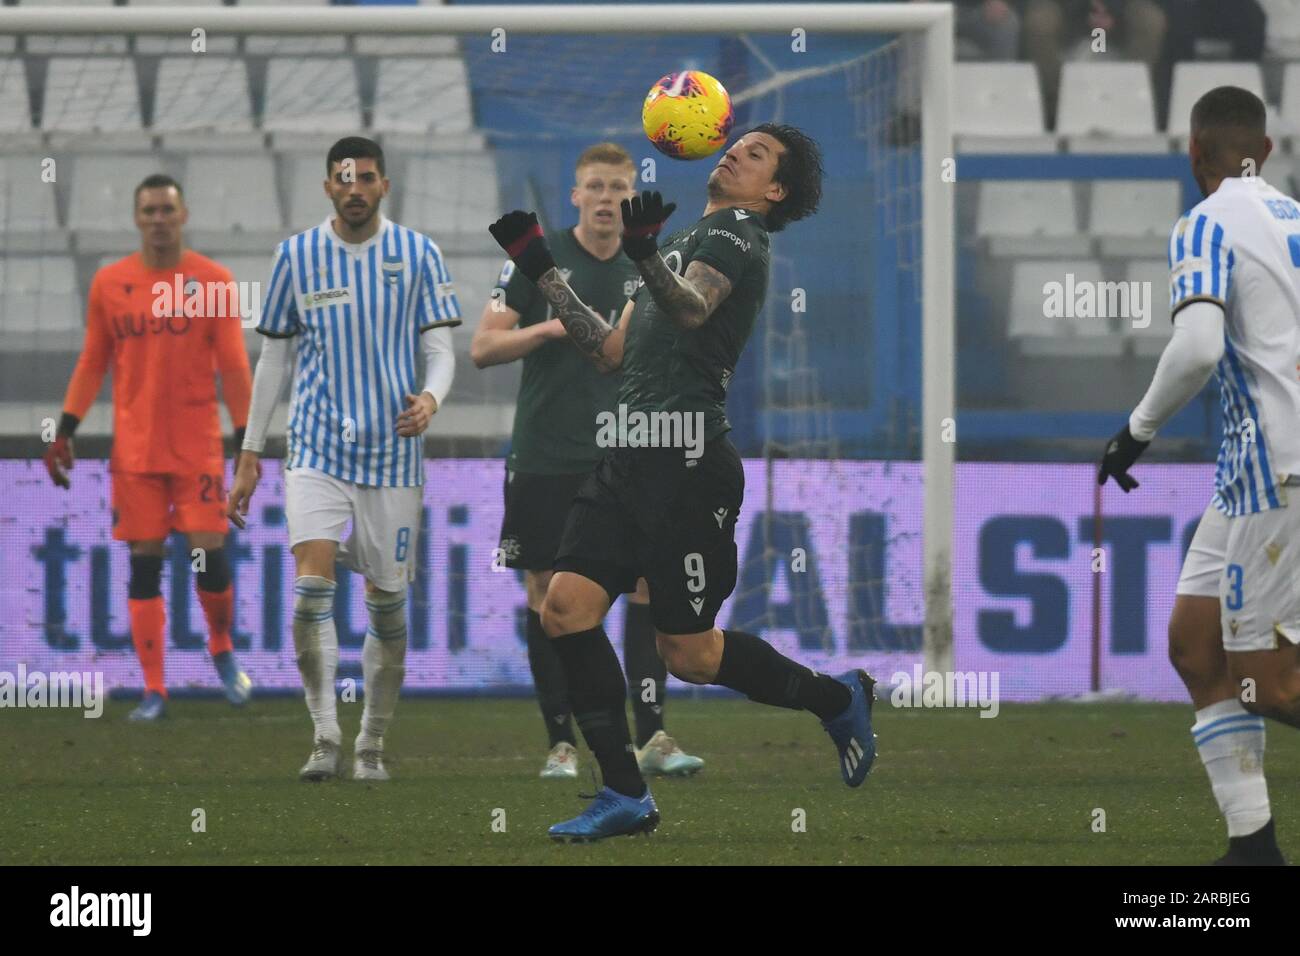 santander bologna during SPAL vs Bologna, Ferrara, Italy, 25 Jan 2020, Soccer italian Serie A soccer match Stock Photo